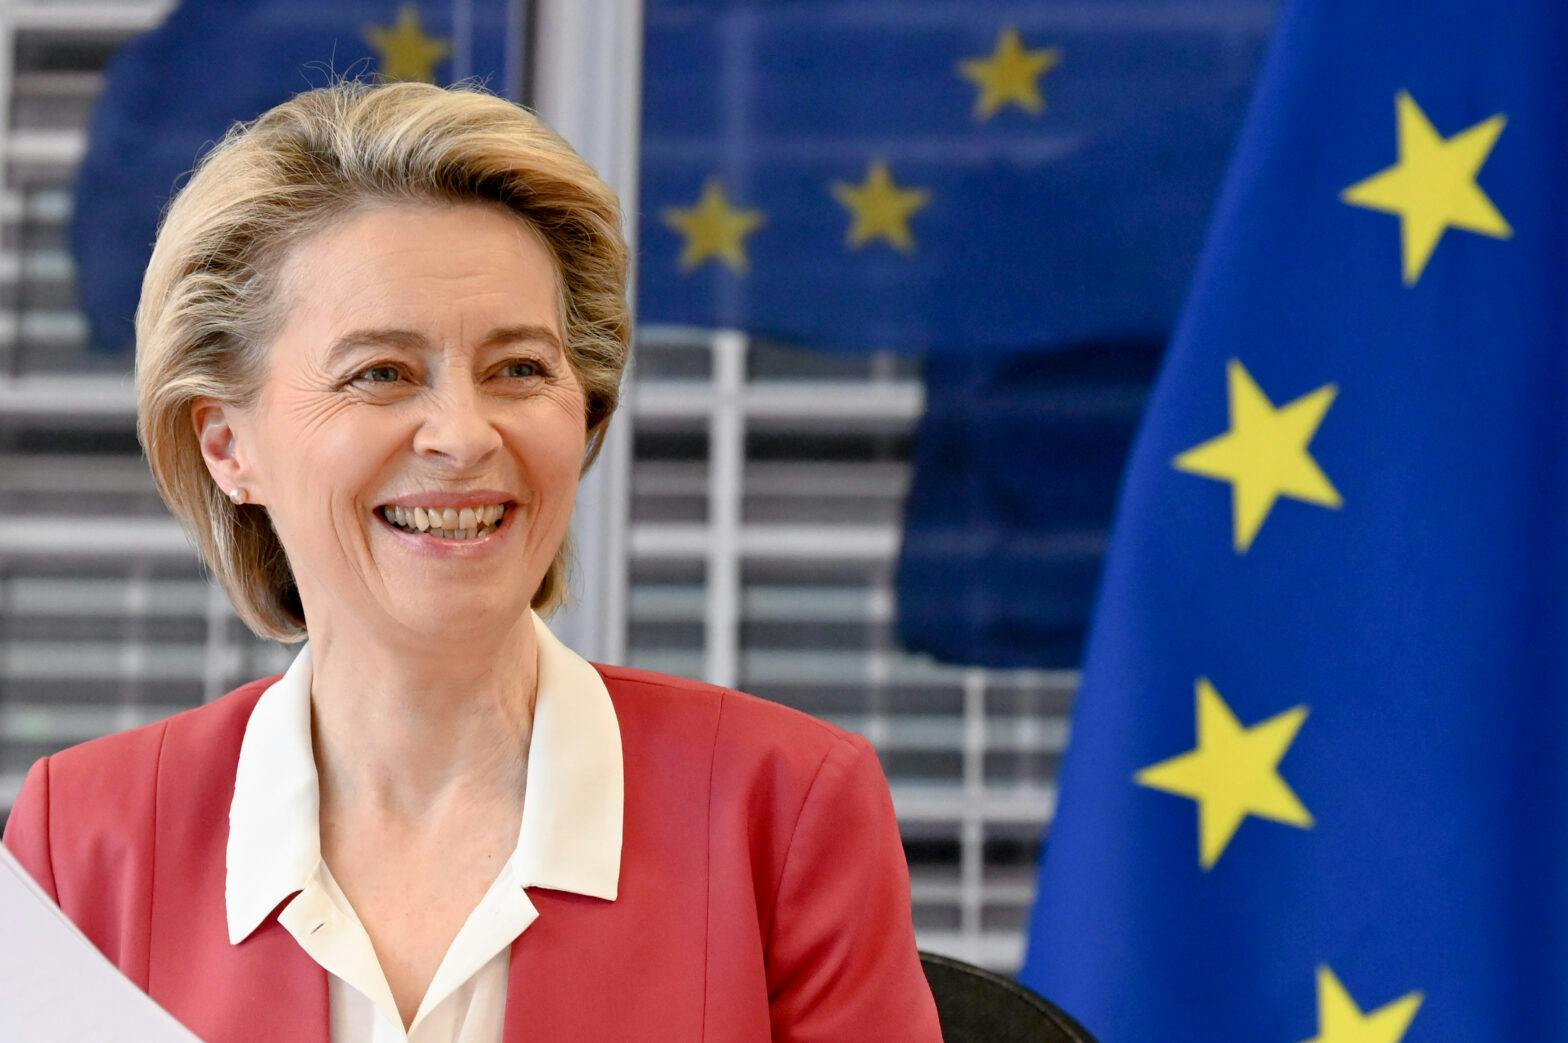 Videoconference between Ursula von der Leyen, President of the European Commission, and inter-institutional actors